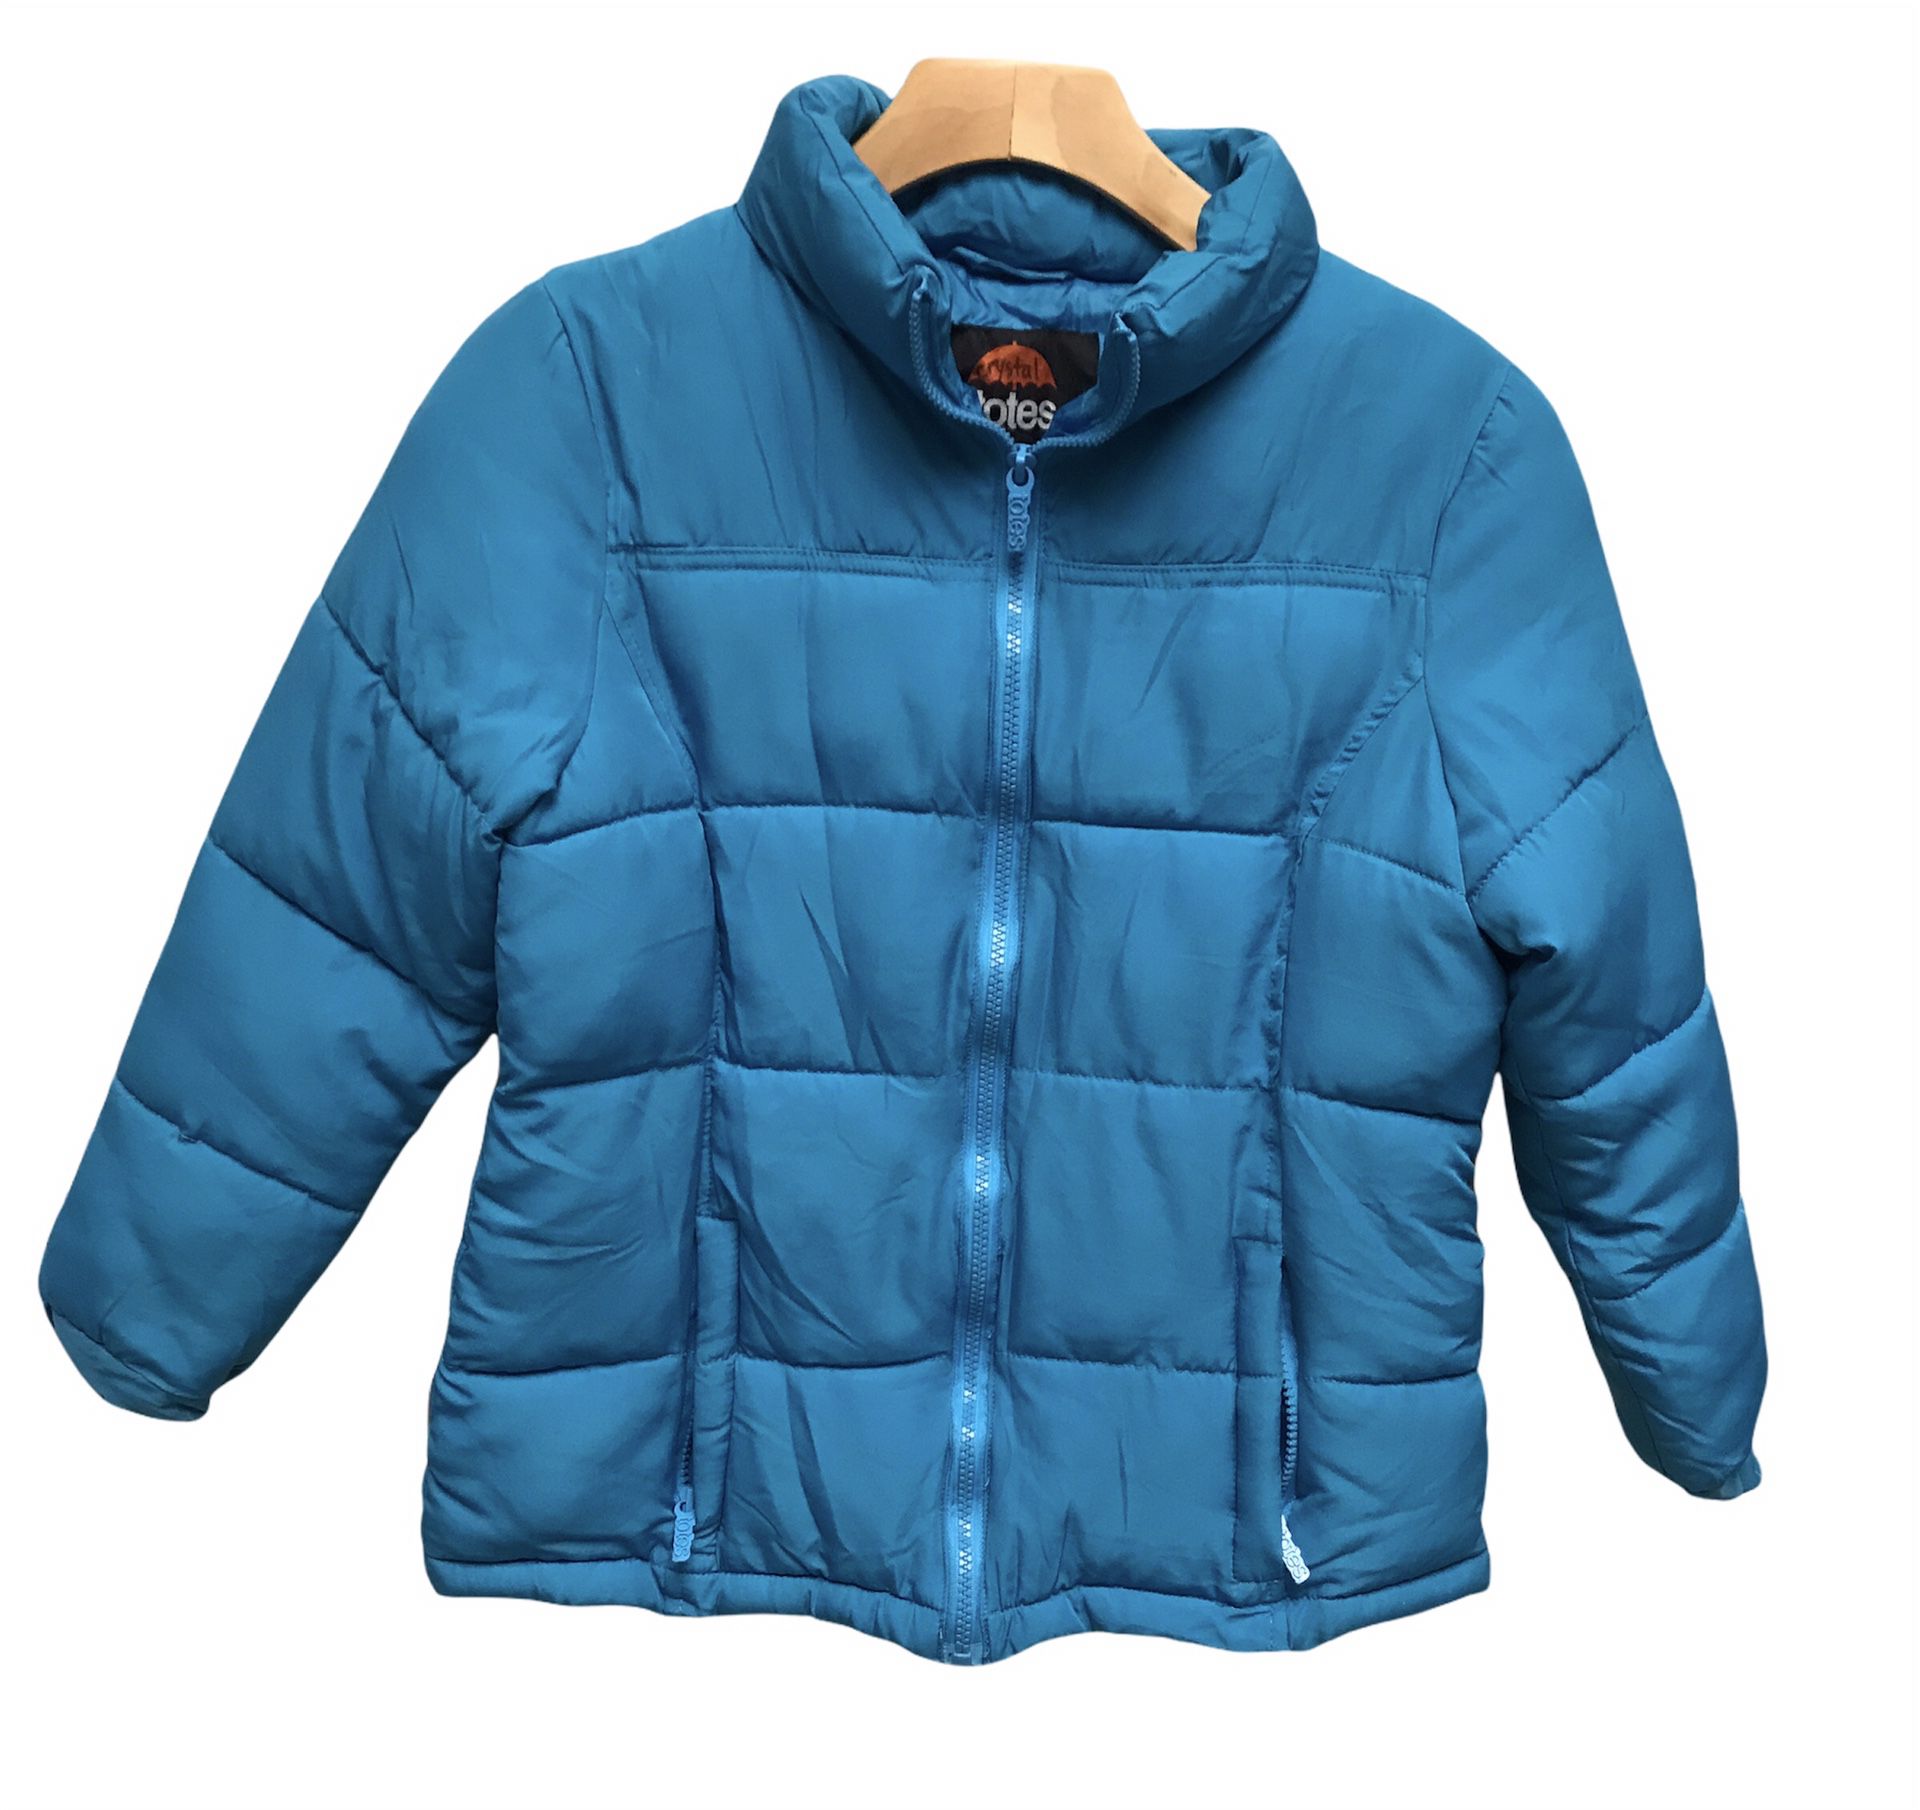 Totes Girls Size 8-10 (Medium) Puffer-Style Zip Up Winter Jacket